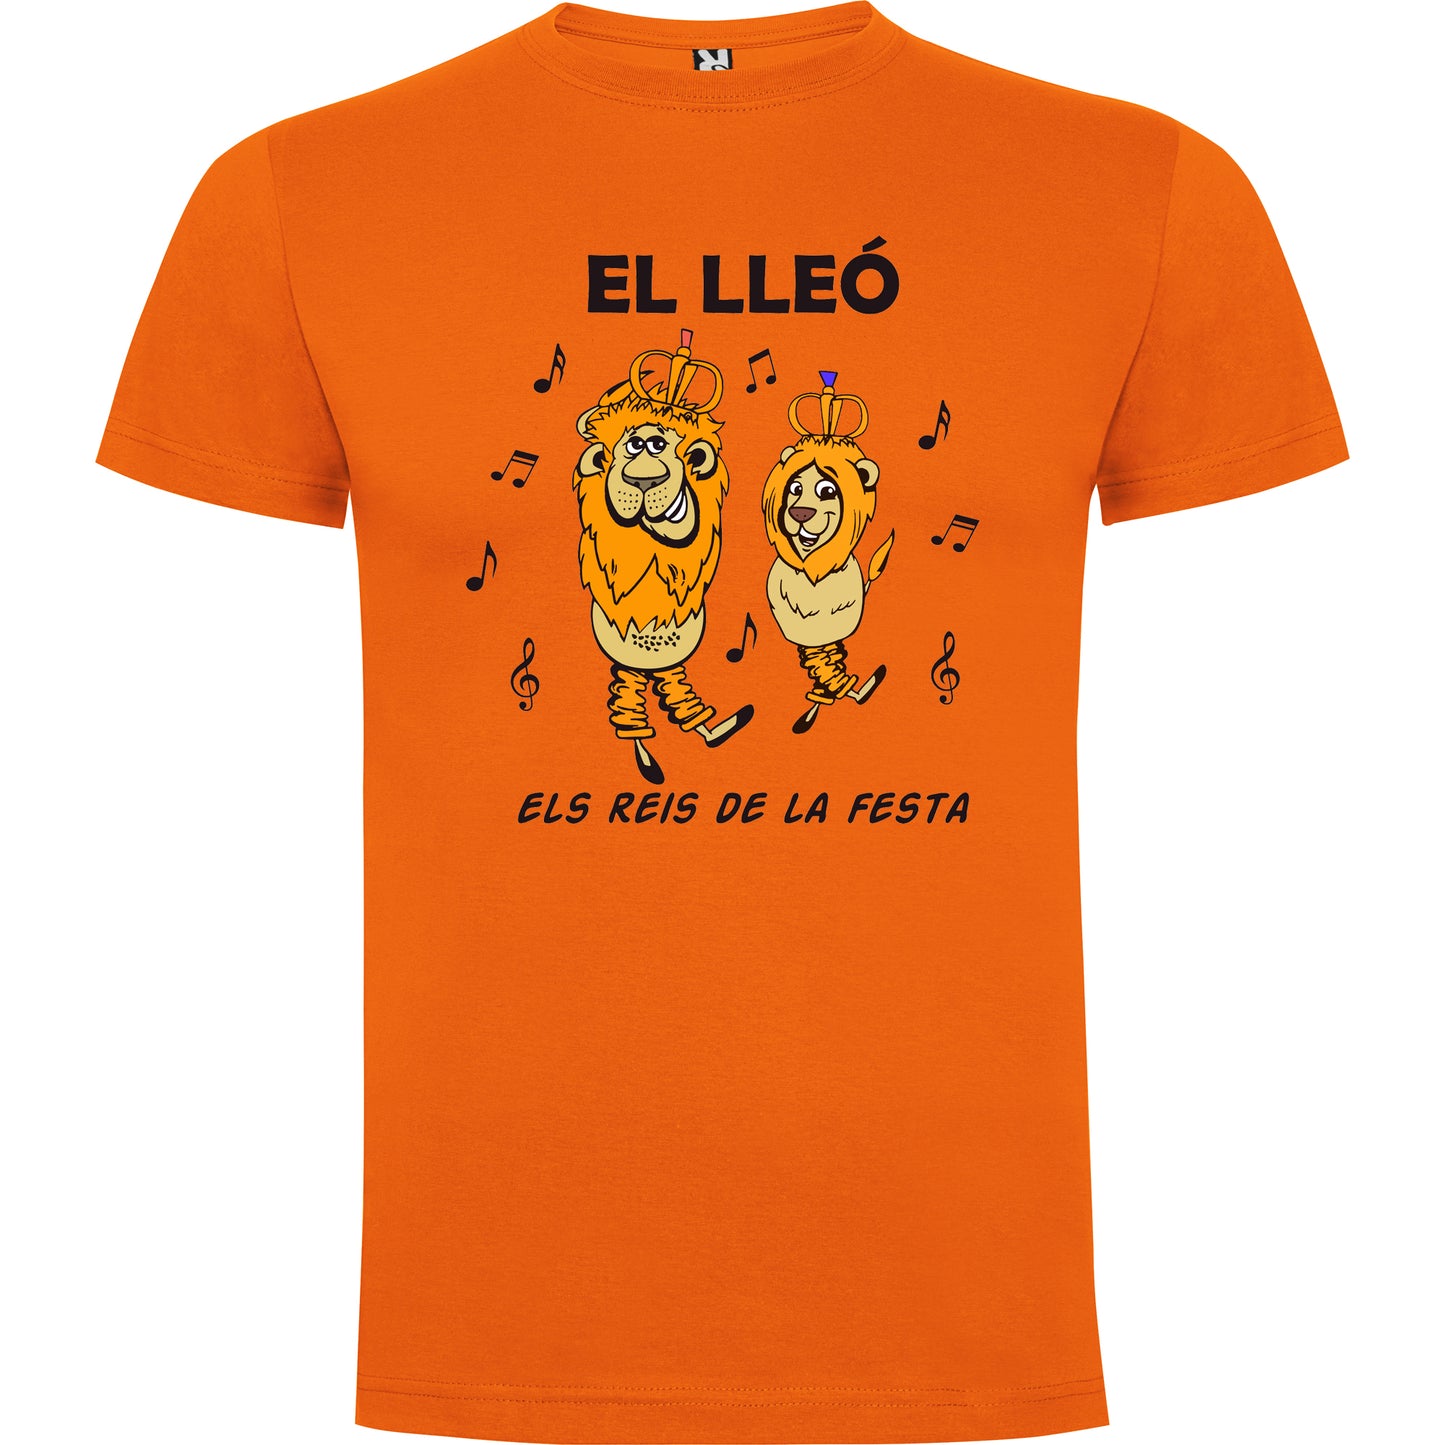 Camiseta personalizada El lleó